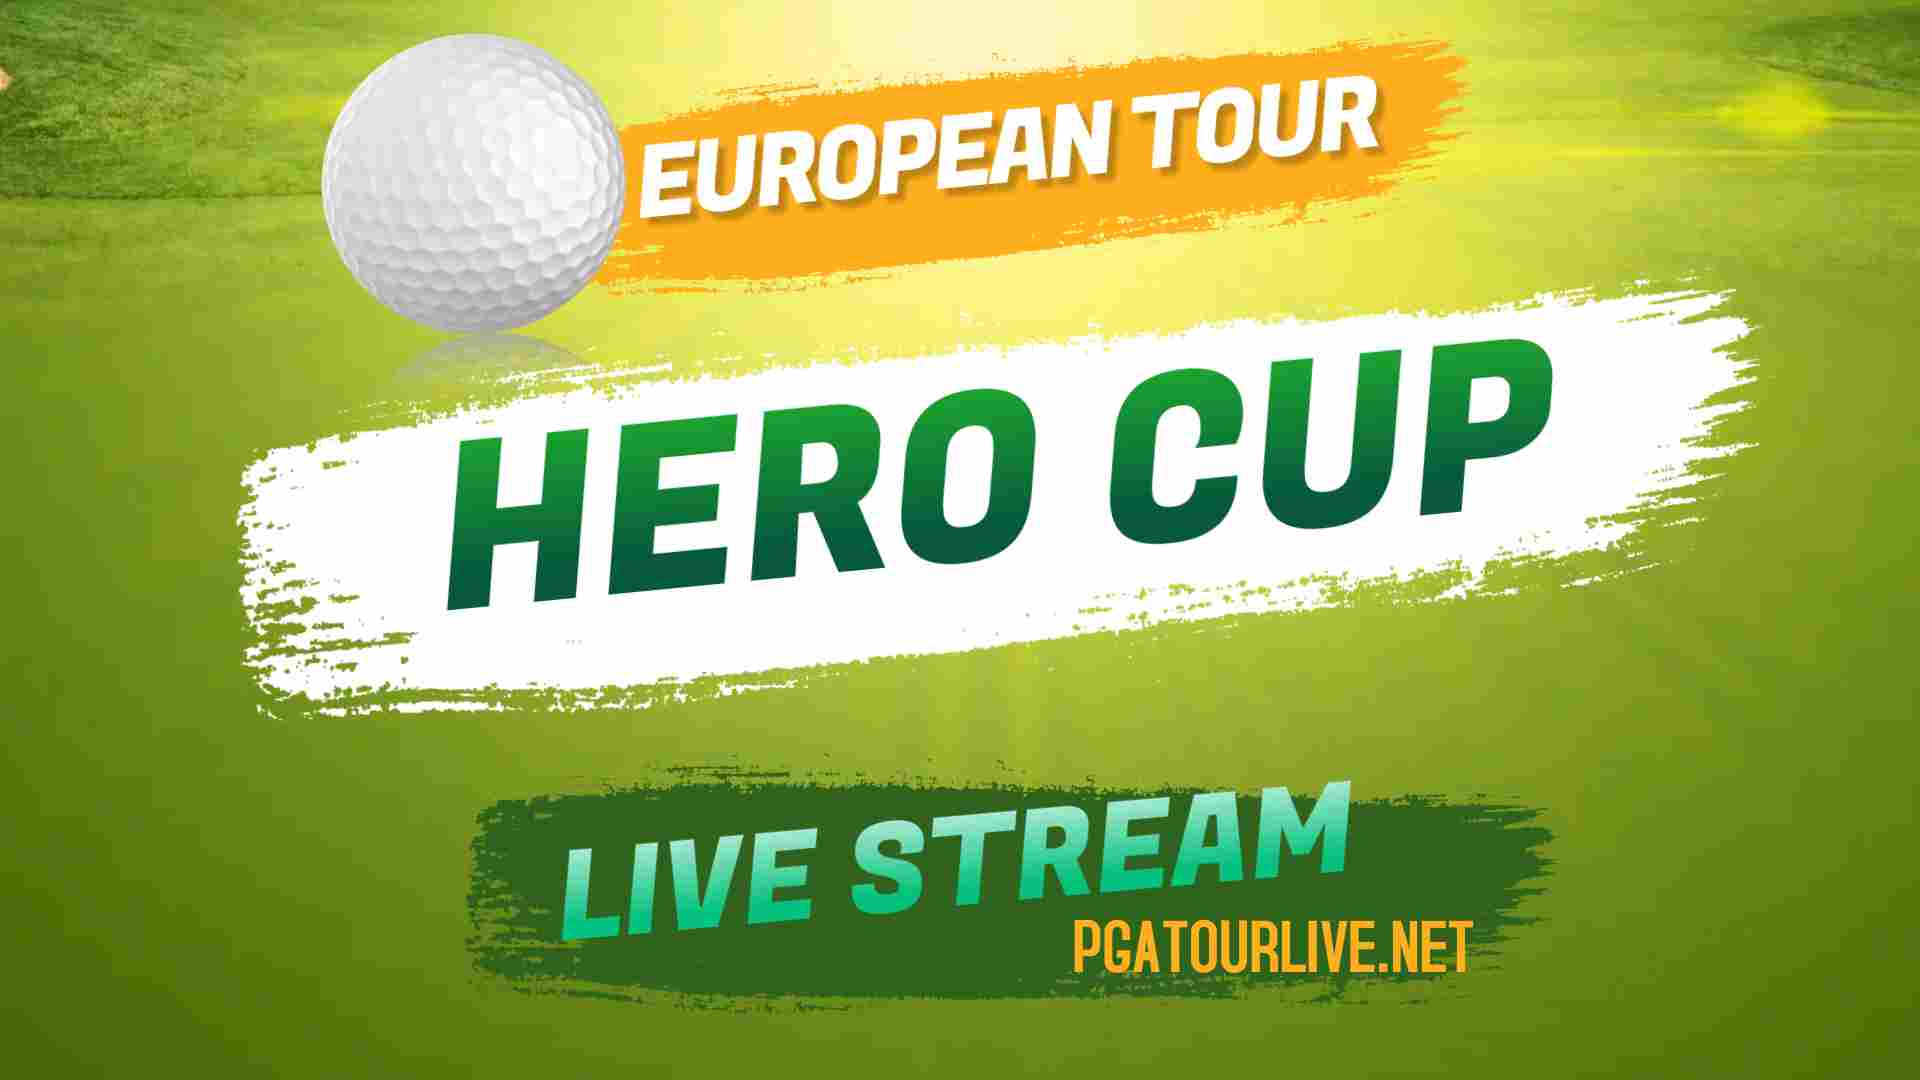 Hero Cup Golf Live Stream European Tour